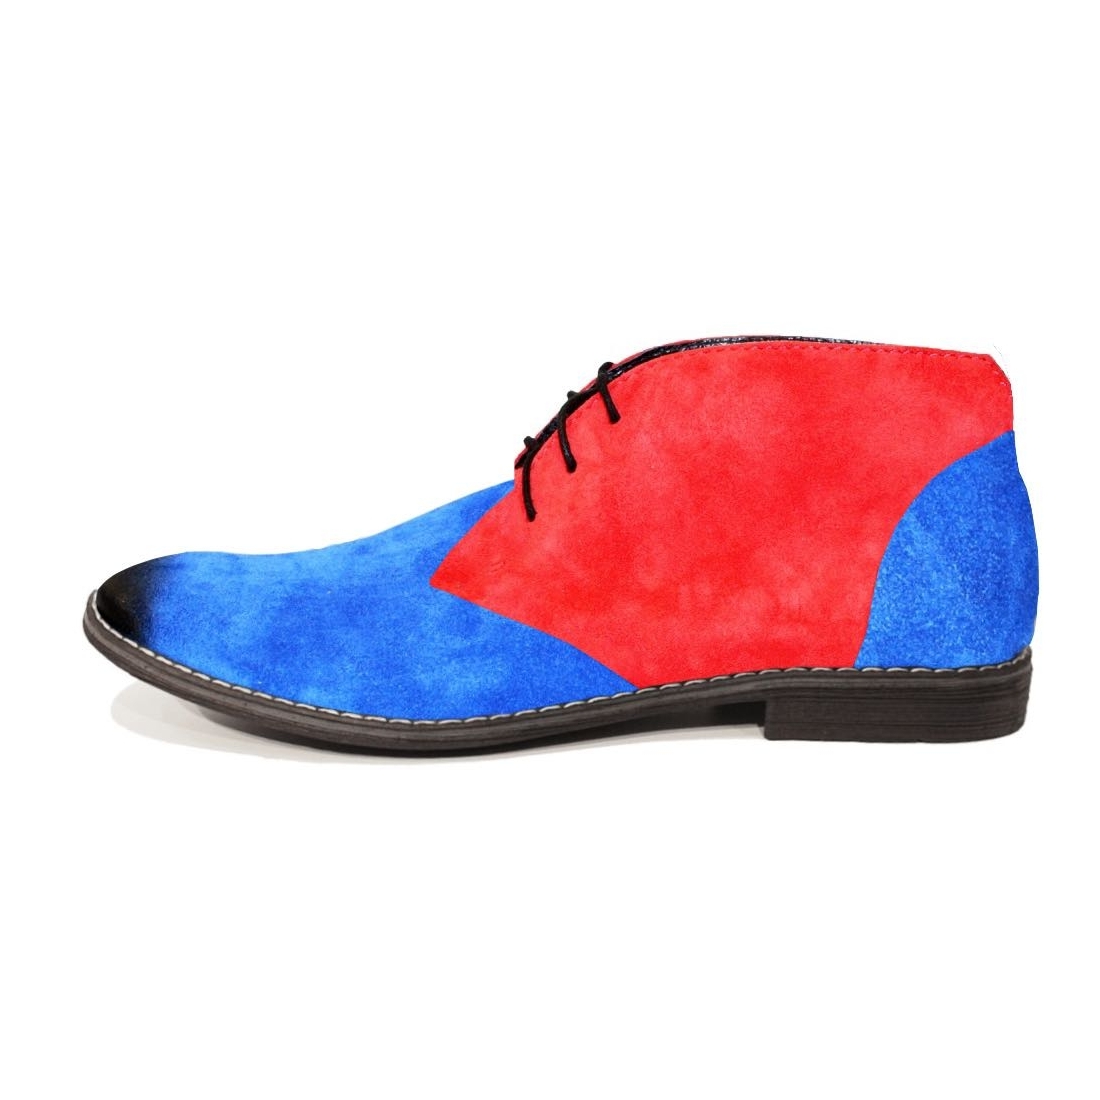 Modello Sterrer - чукка мужские - Handmade Colorful Italian Leather Shoes